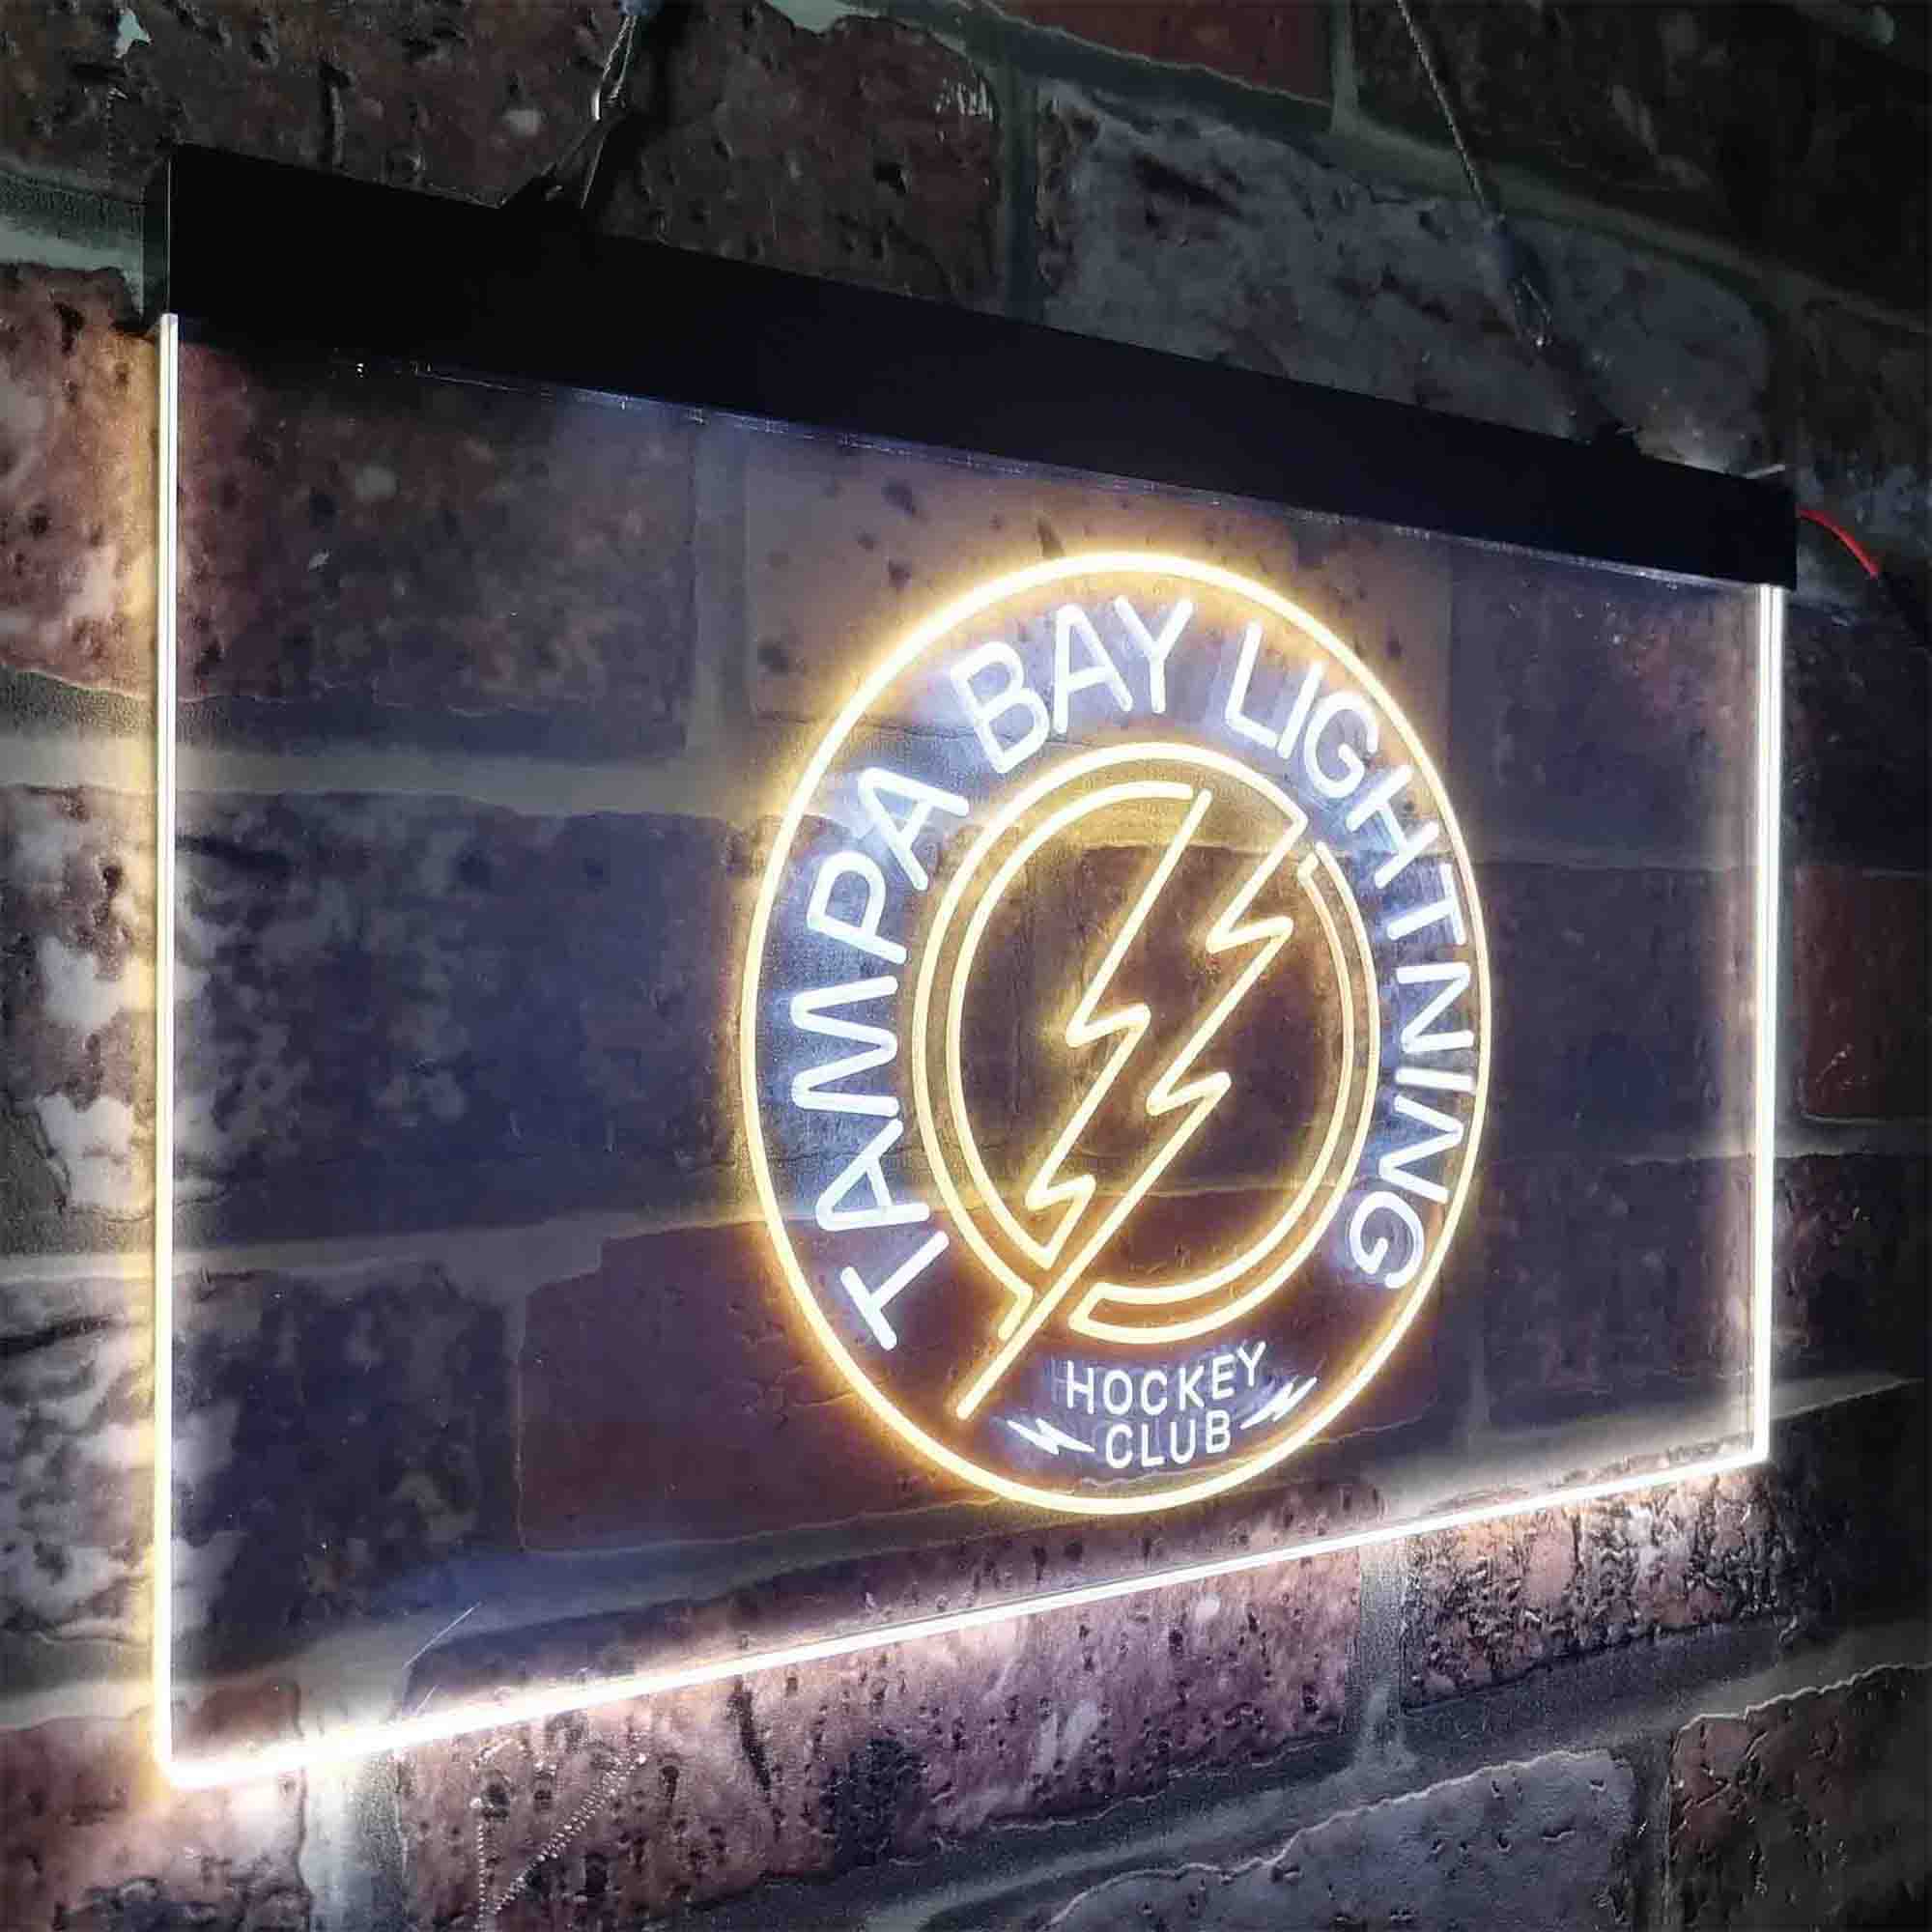 Tampas Bays Lightnings LED Neon Sign